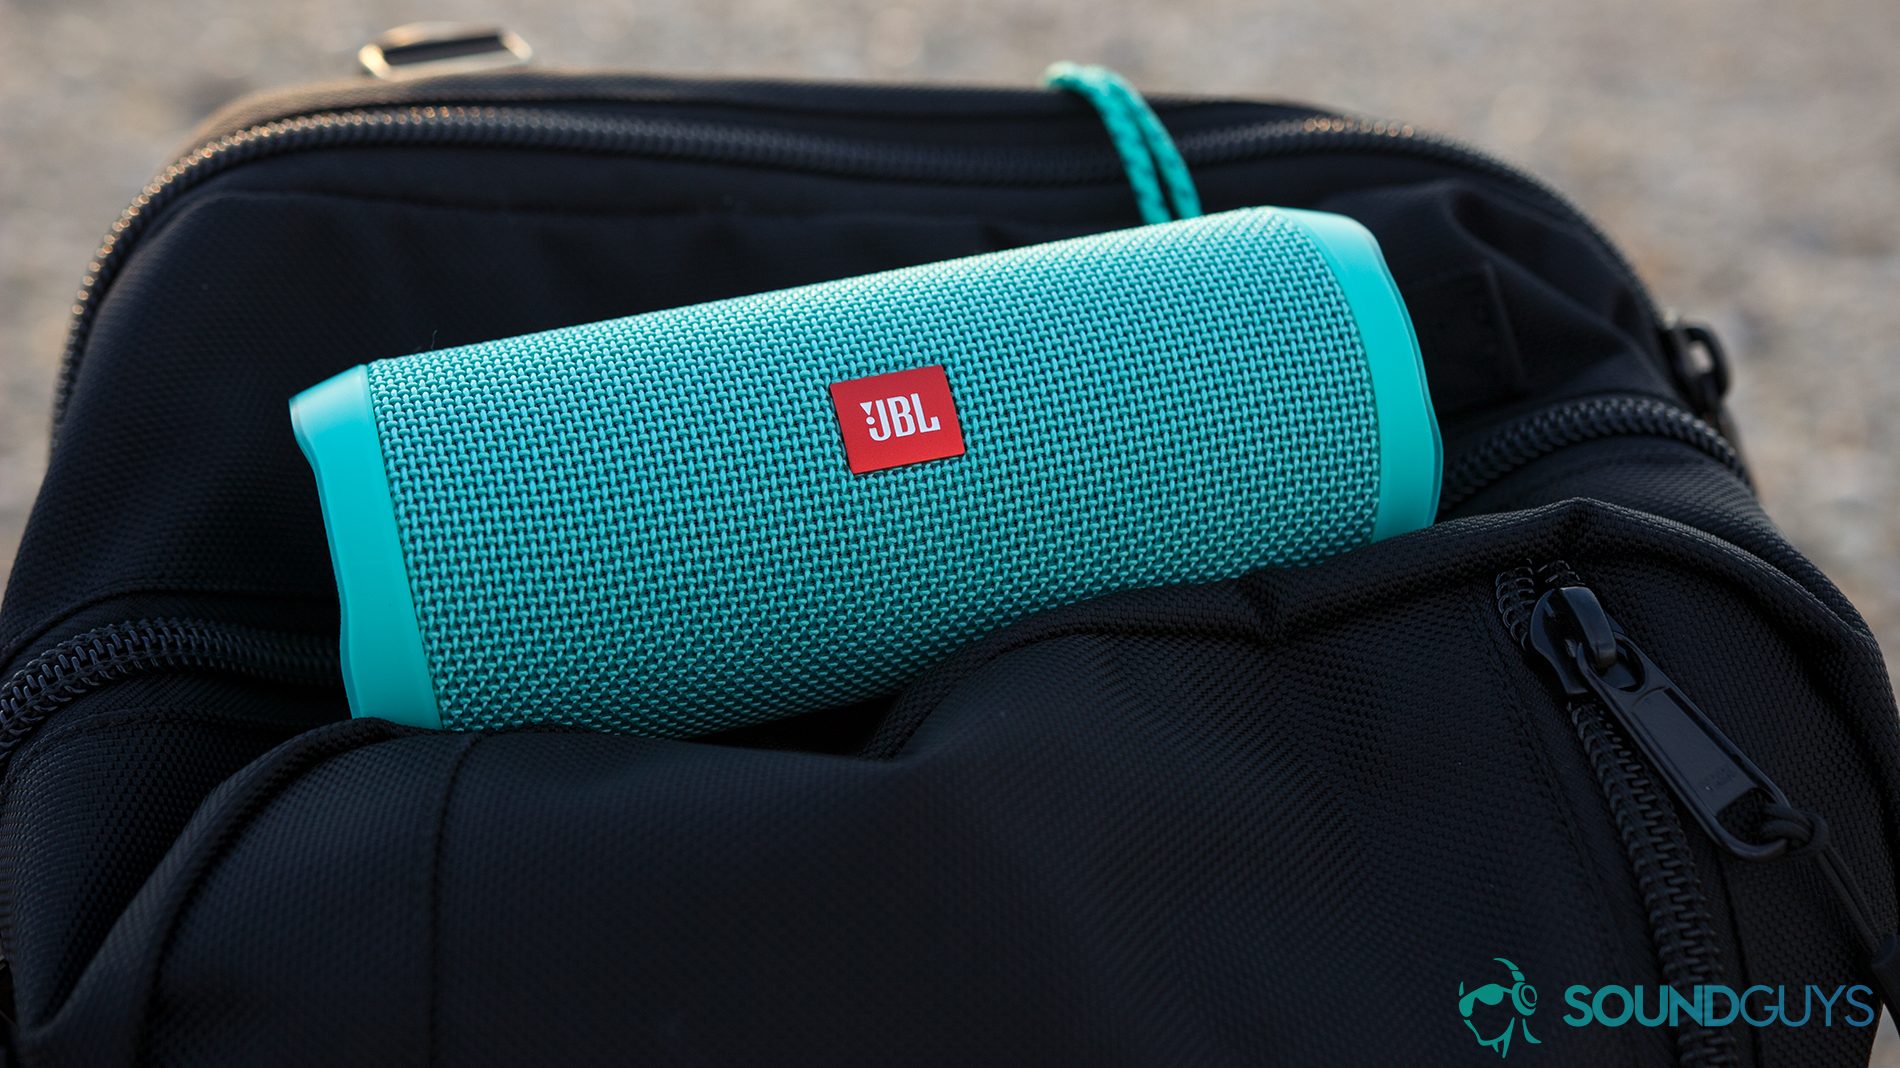 waterproof speakers: The JBL Flip 4 in aqua blue. It's in a black duffle bag on a beach at sunset.